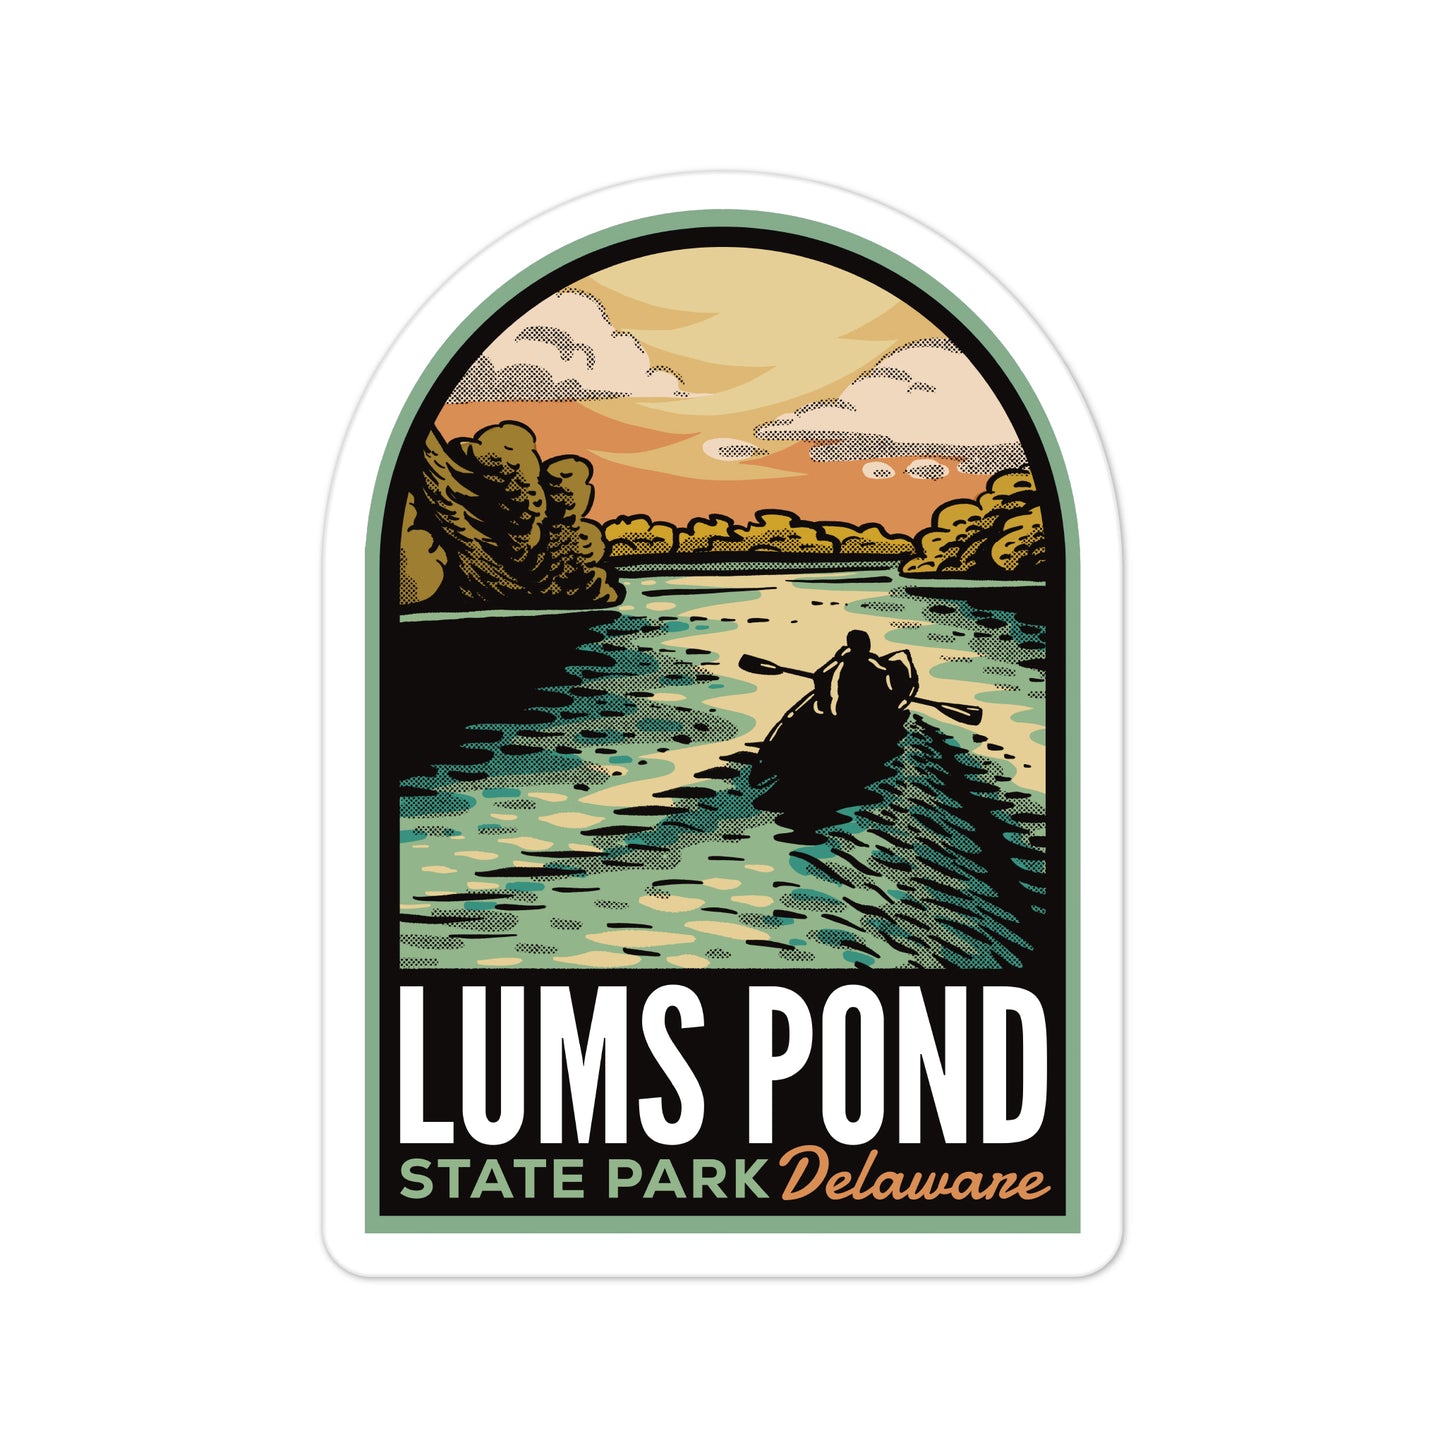 A sticker of Lums Pond State Park